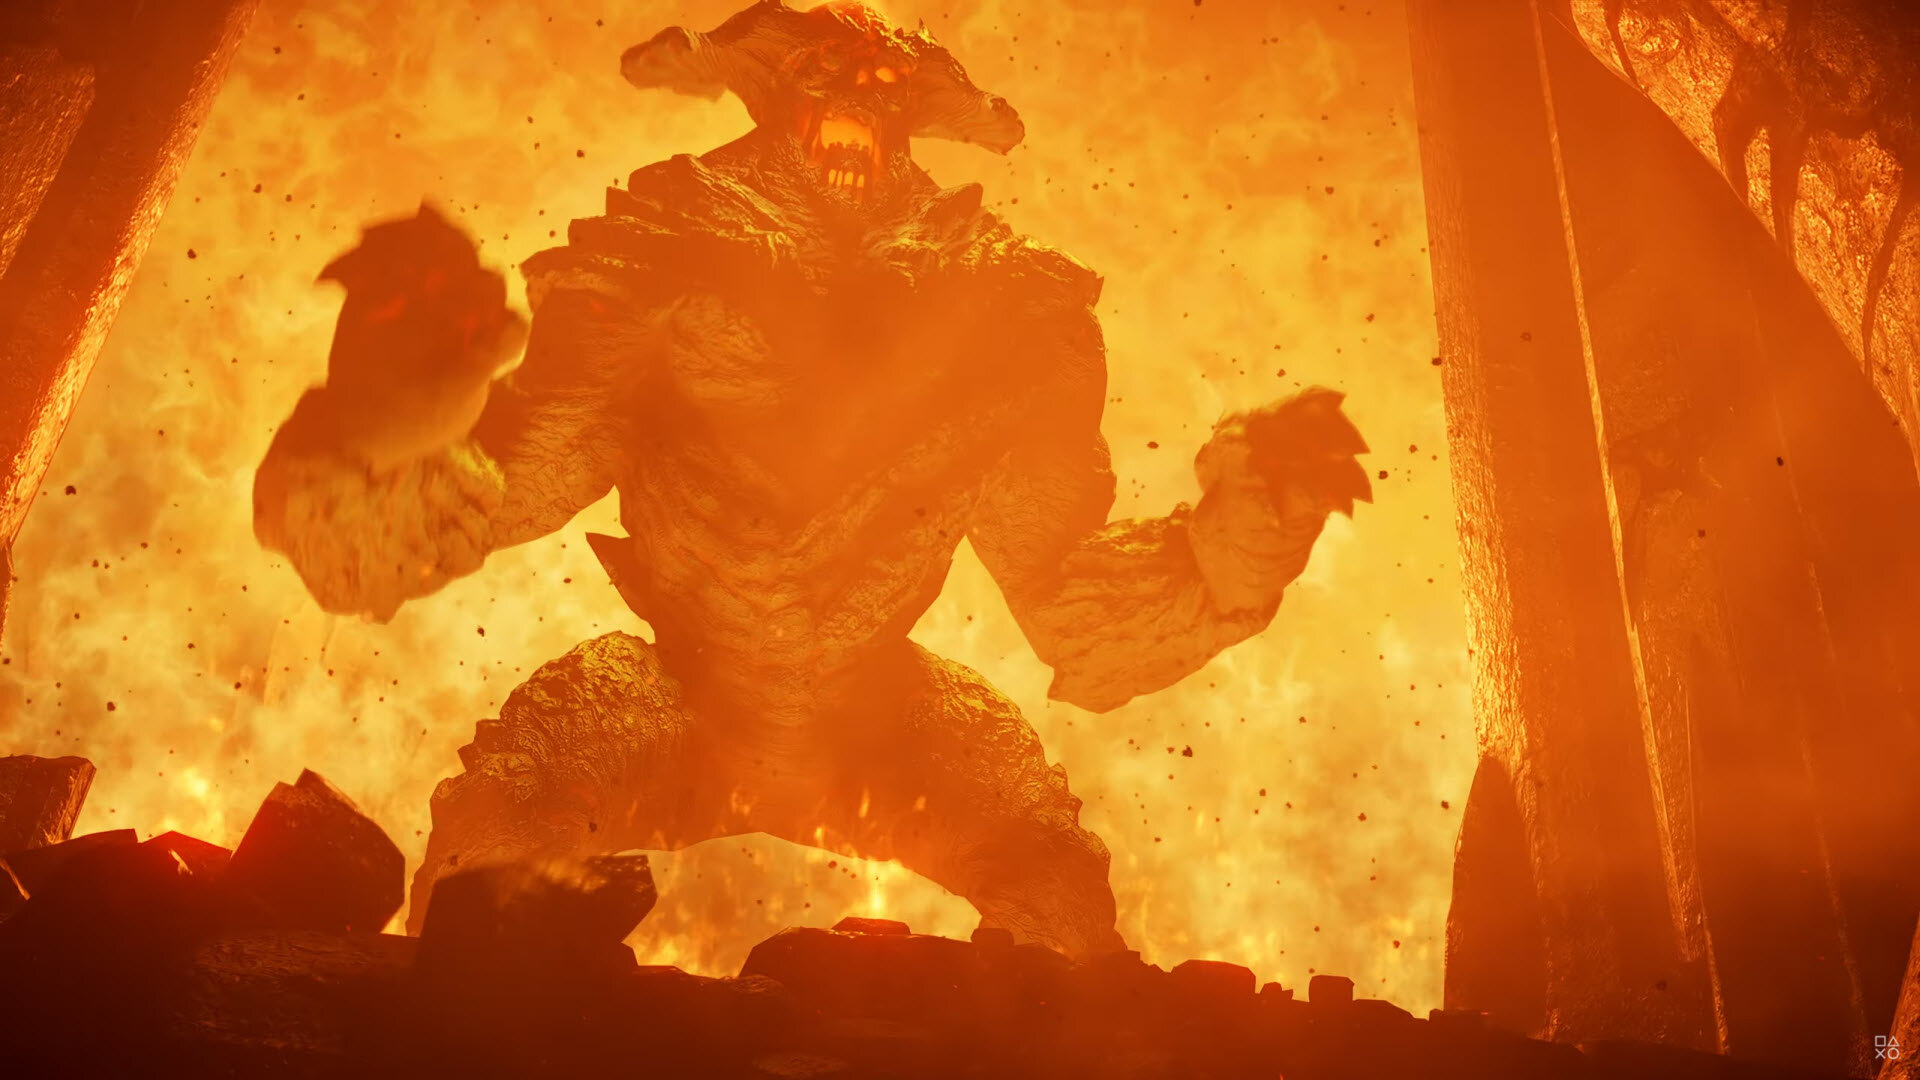 Demon's Souls' comparison video highlights the remake's improvements